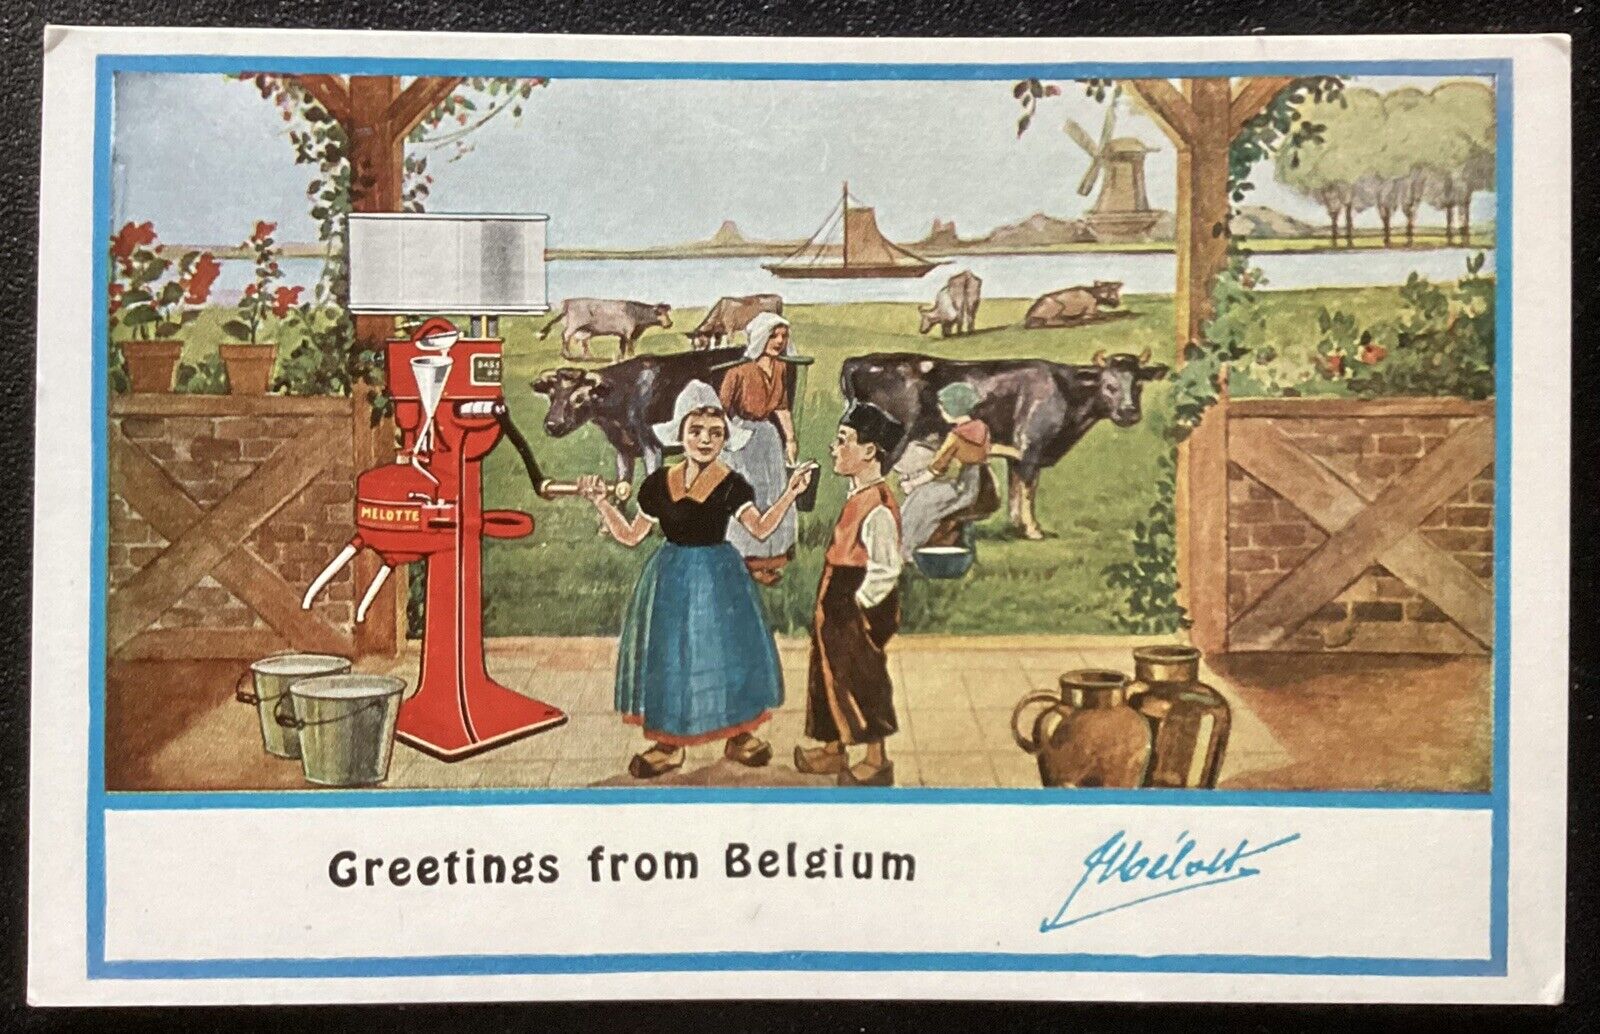 Melotte Cream Separator Adv Postcard VG, Greetings From Belgium Unused (7-11